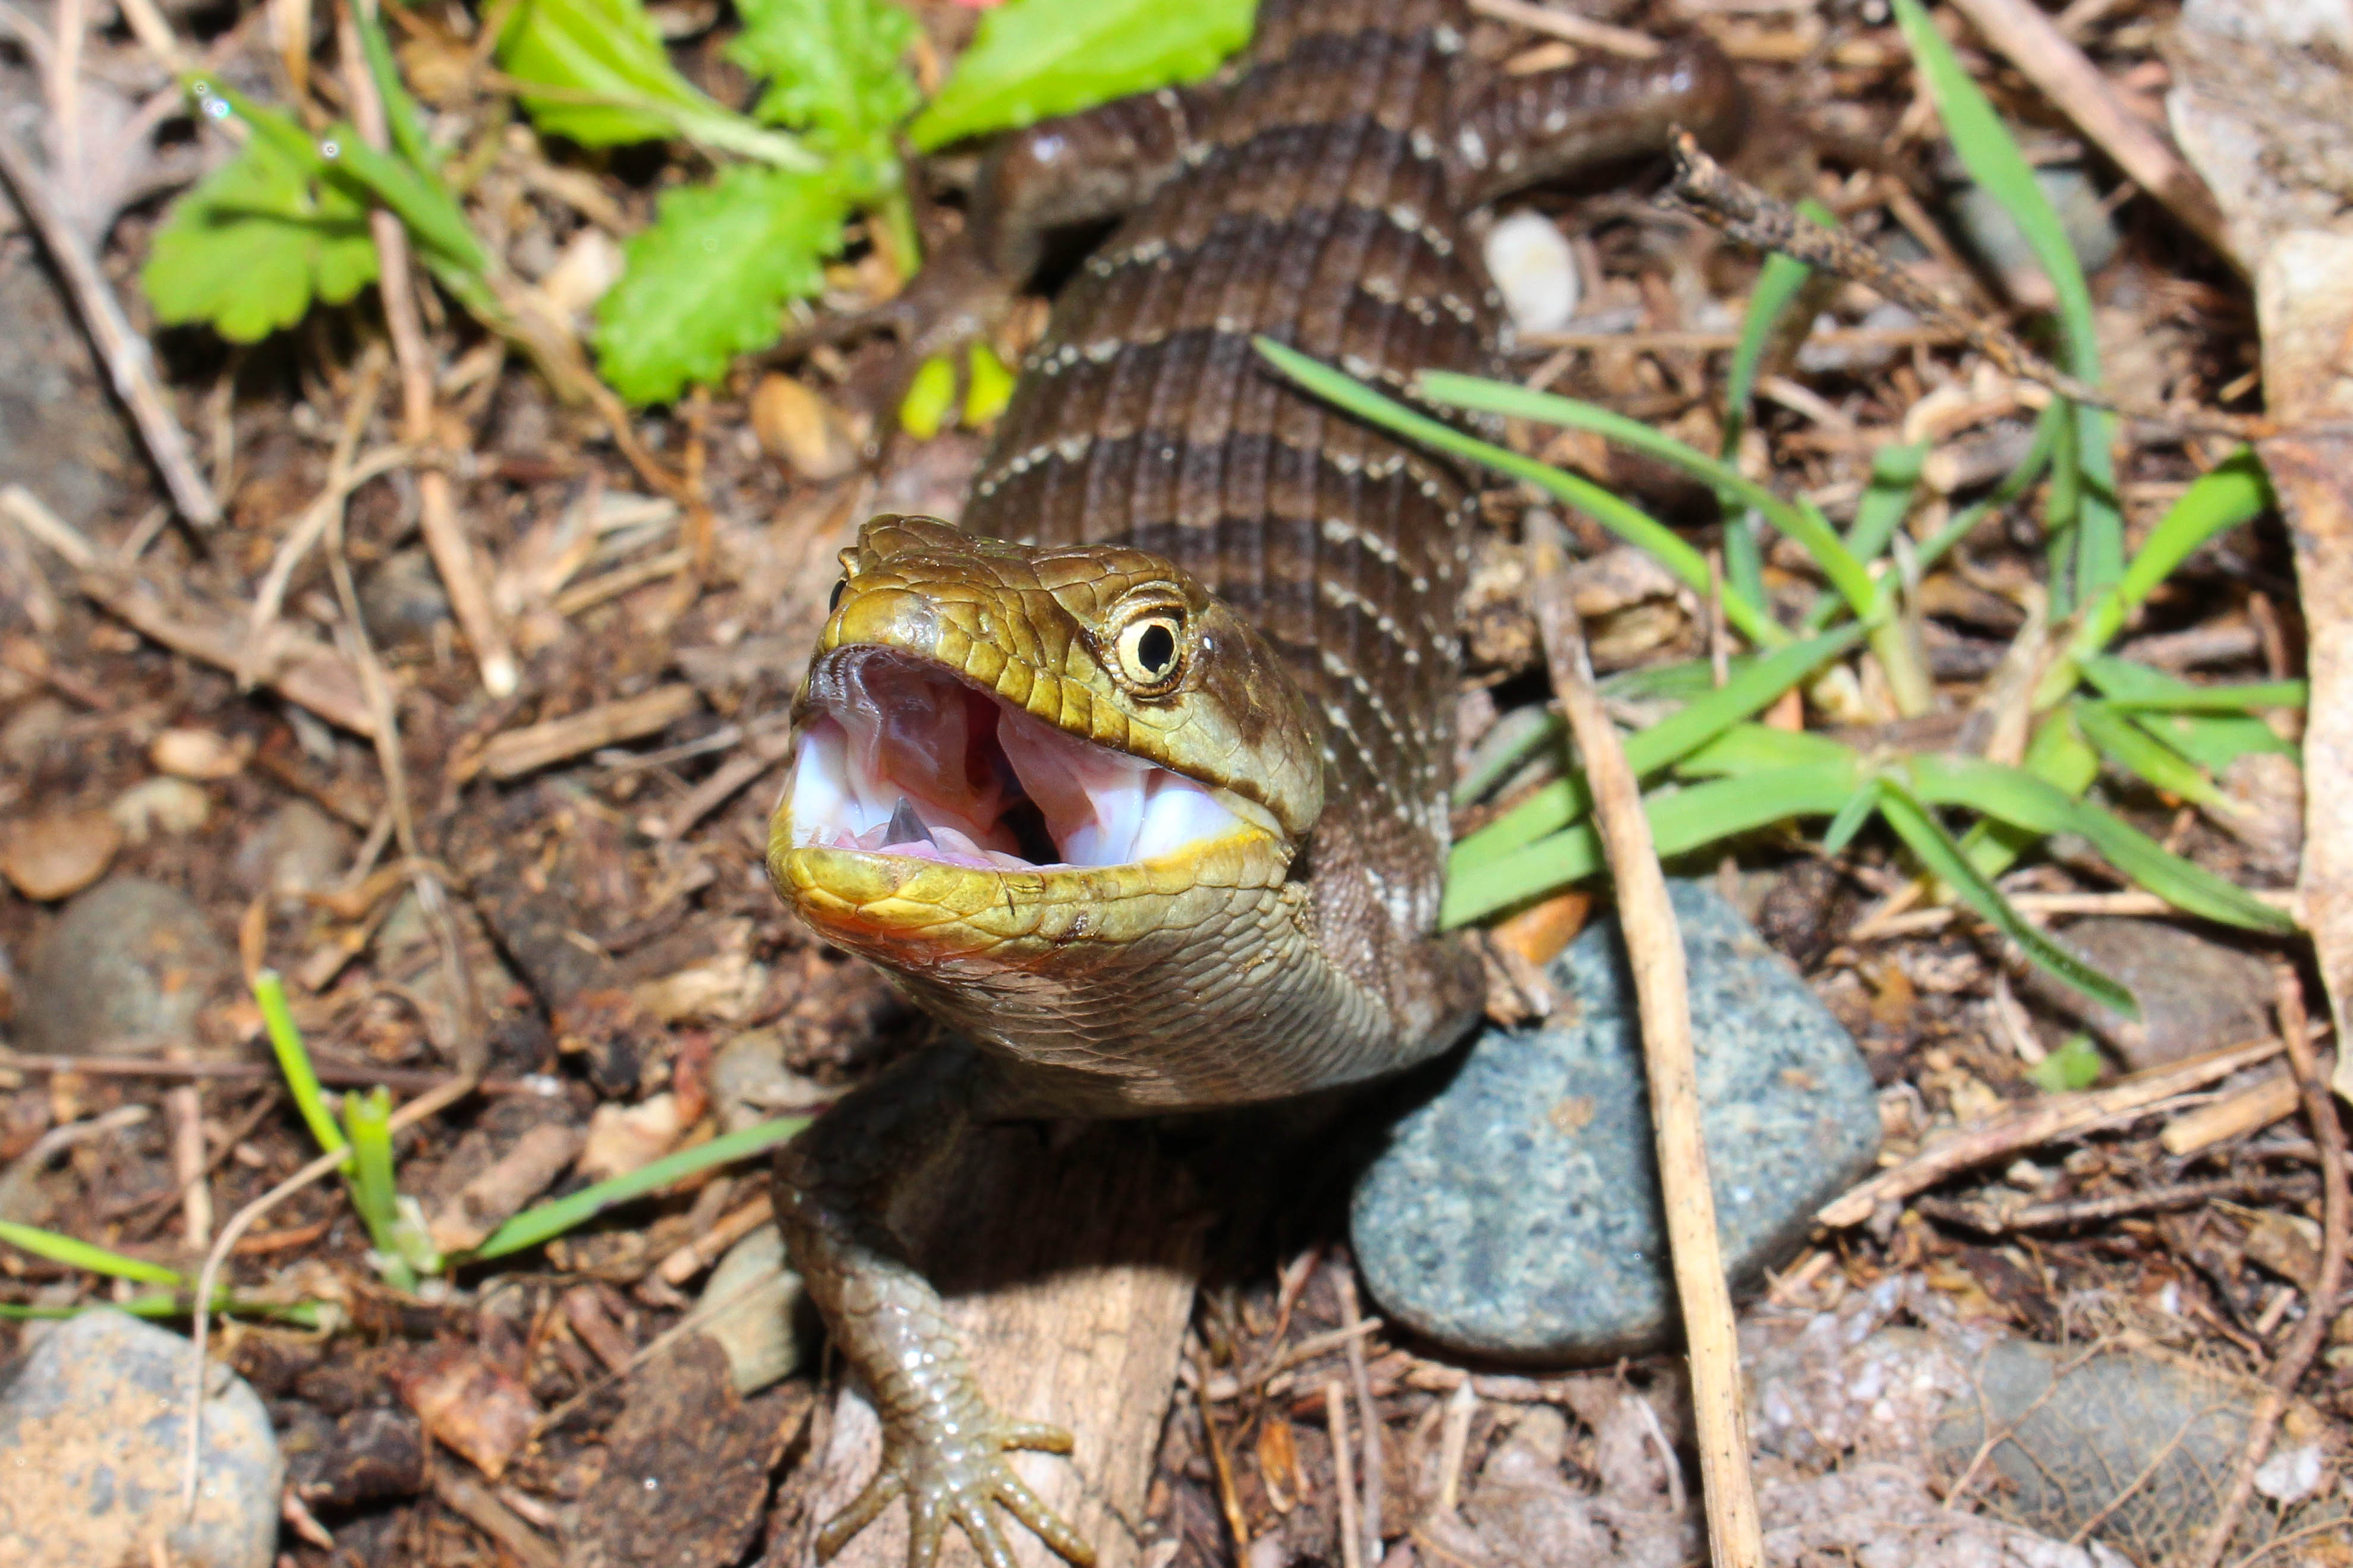 Southern alligator lizard - Wikipedia